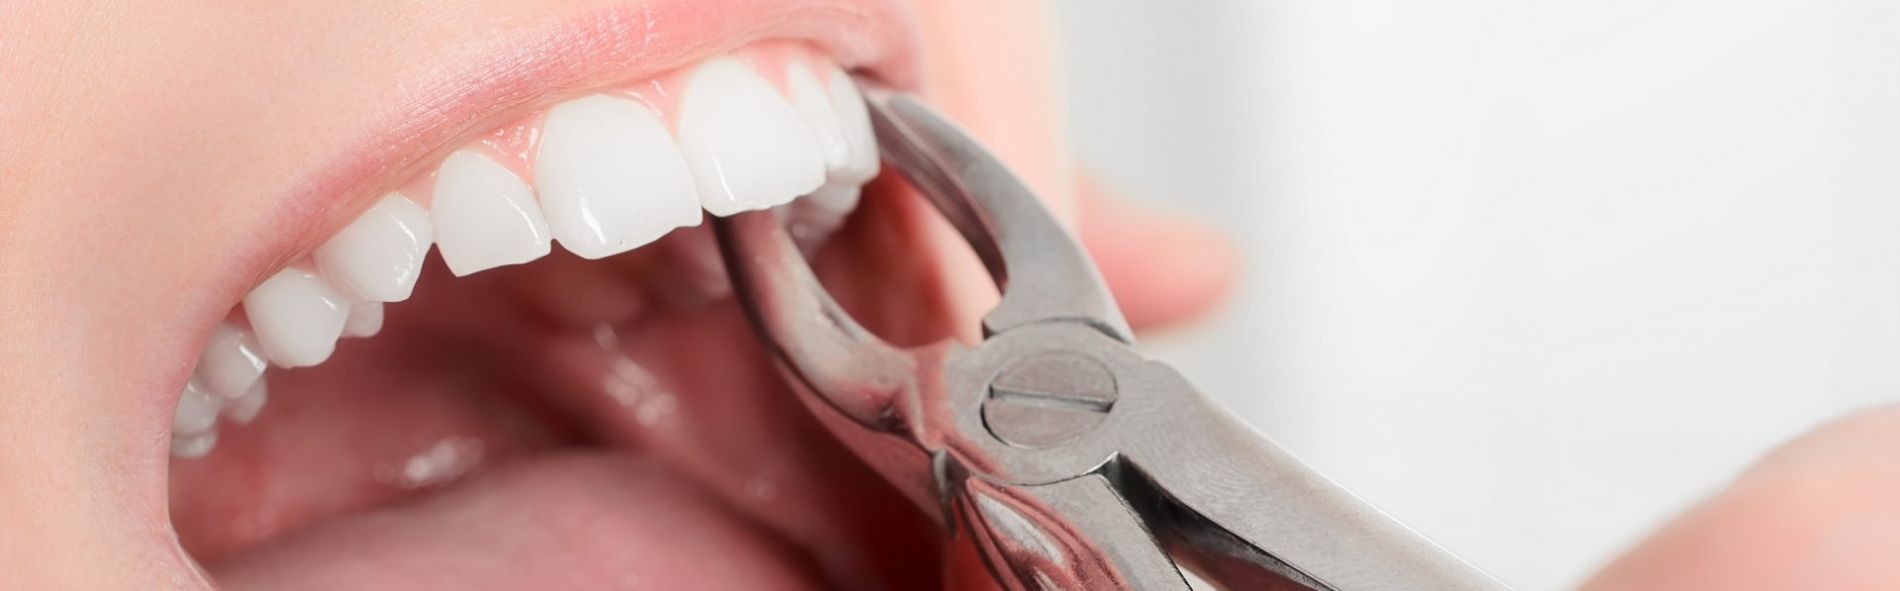 Exodoncia Clinica Dental Oralvant Ibague Colombia